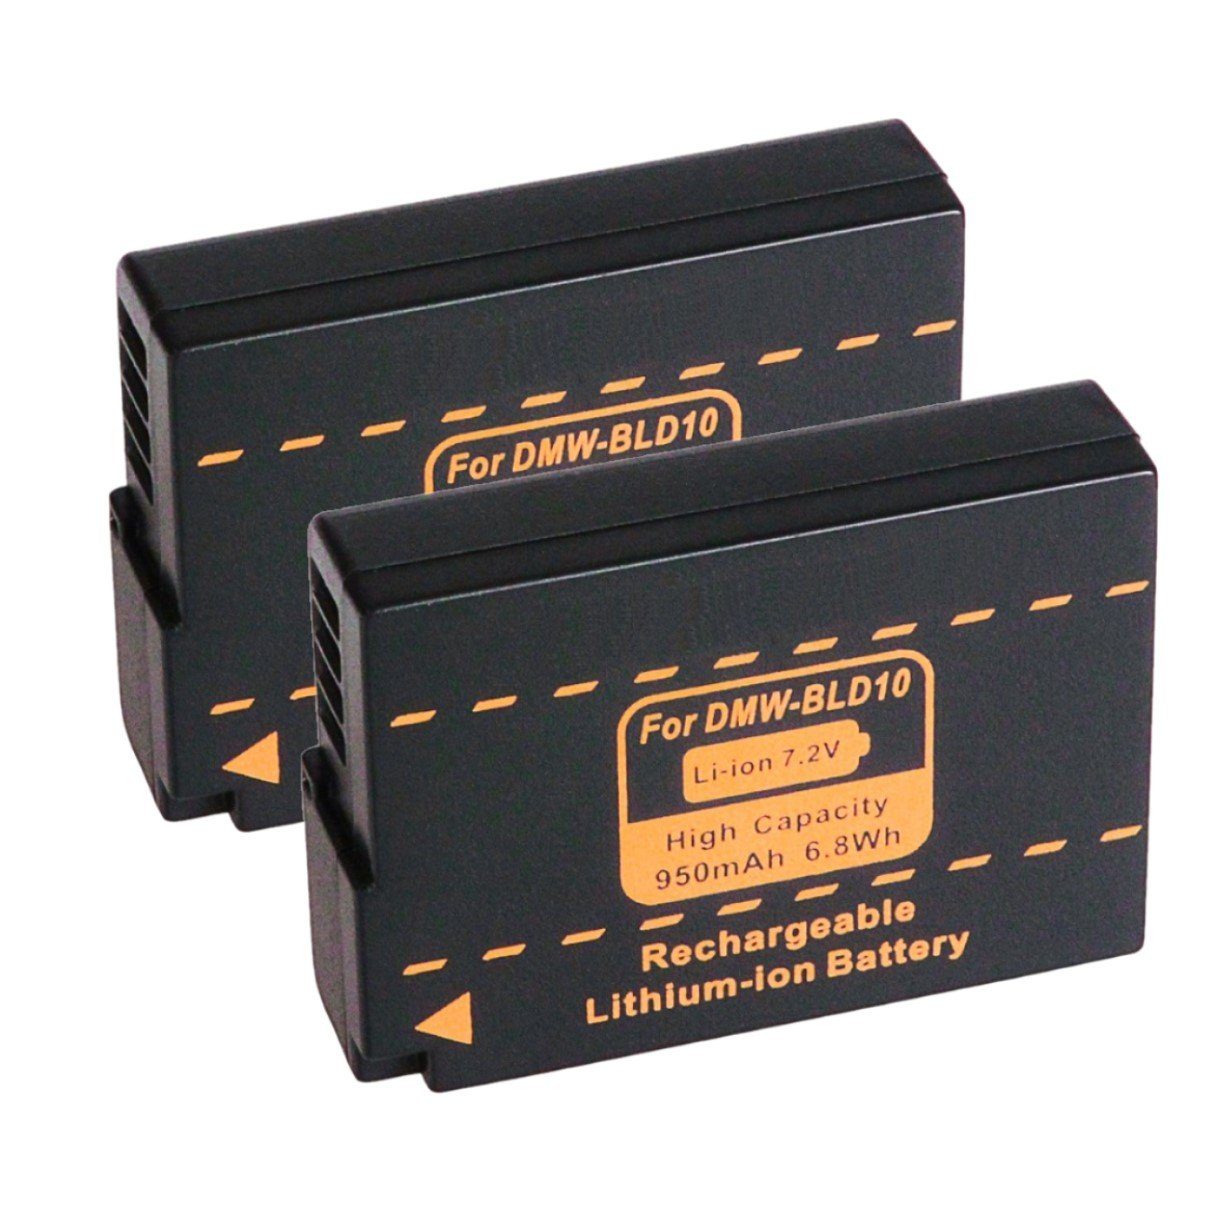 Passform GOLDBATT inklusive Überhitzungsschutz für maßgefertigte GF2 Akkus (7,2 den BLD10E Panasonic durch St), Akku Ersatzakku mAh 100% BLD10 2x V, Kamera-Akku 950 Original mit 2 kompatibel DMC-GF2